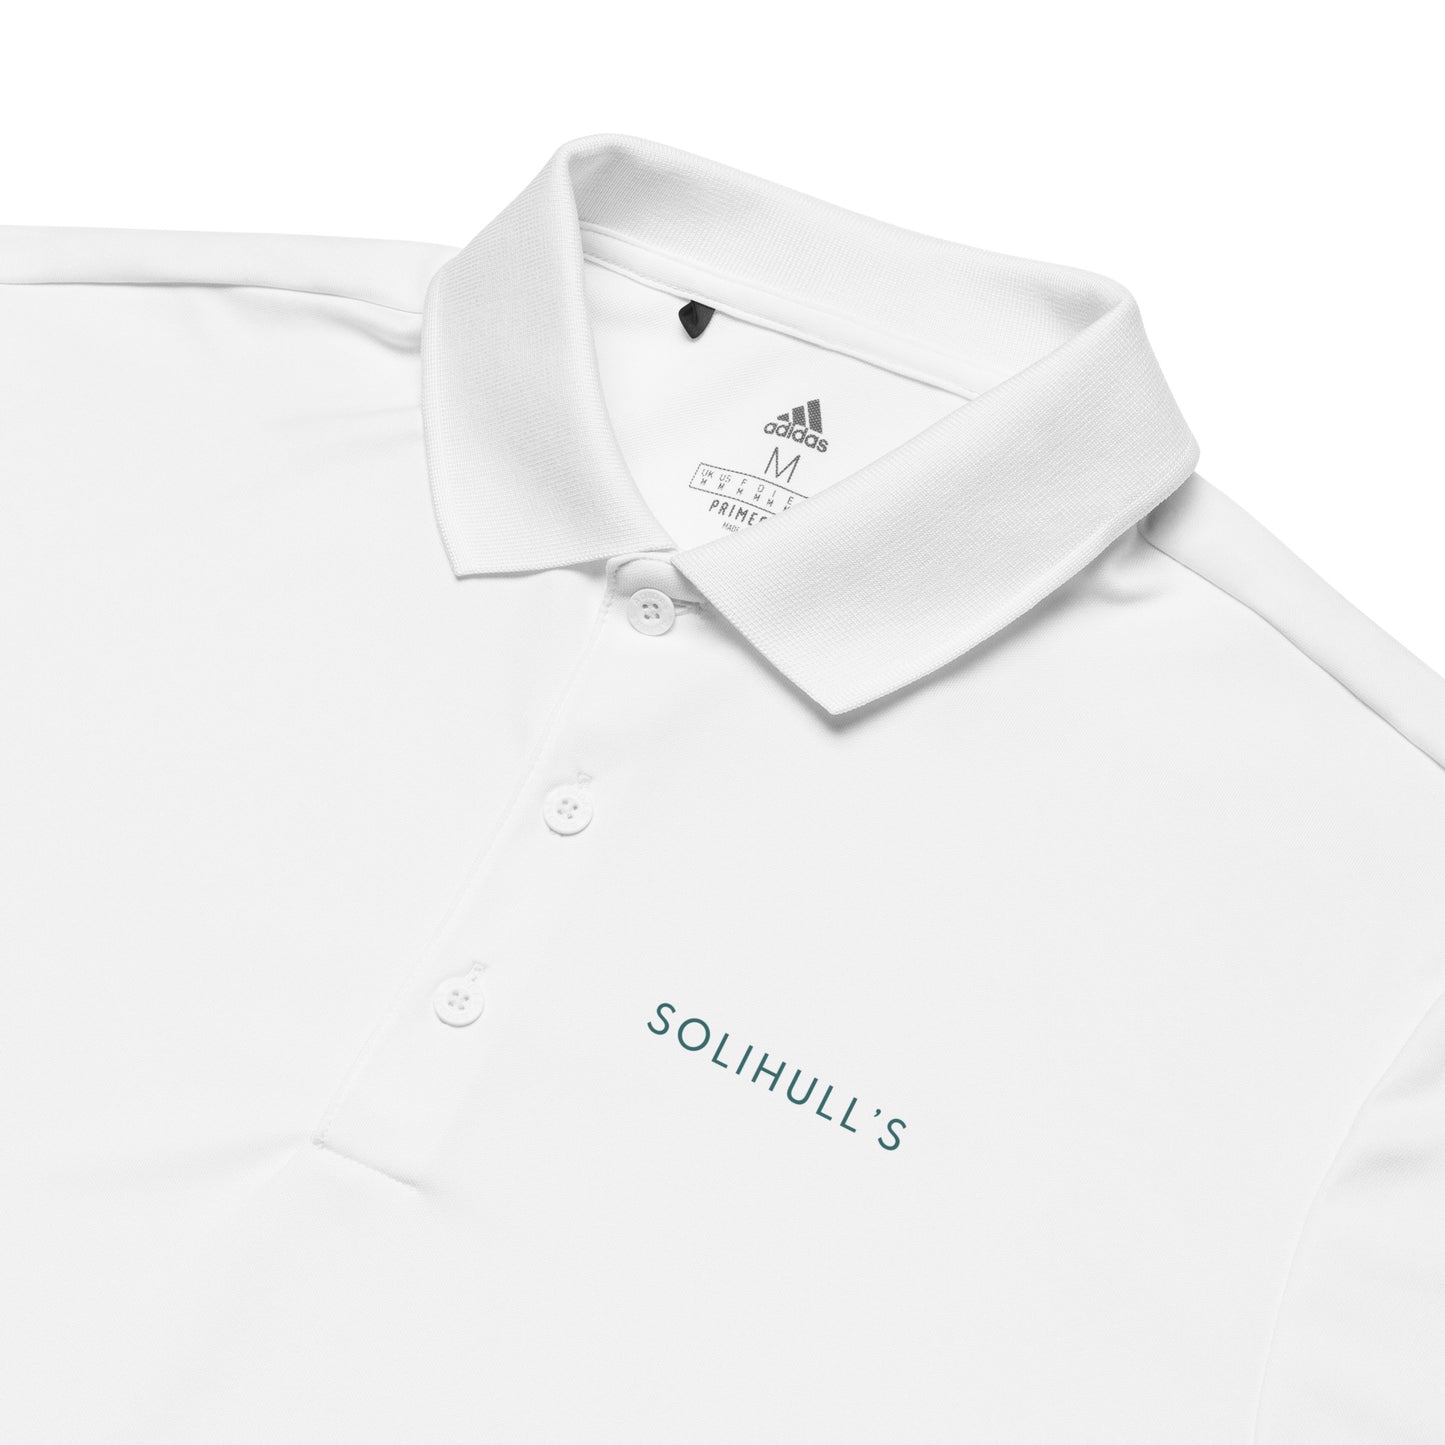 Solihull’s/Adidas Polo Shirt